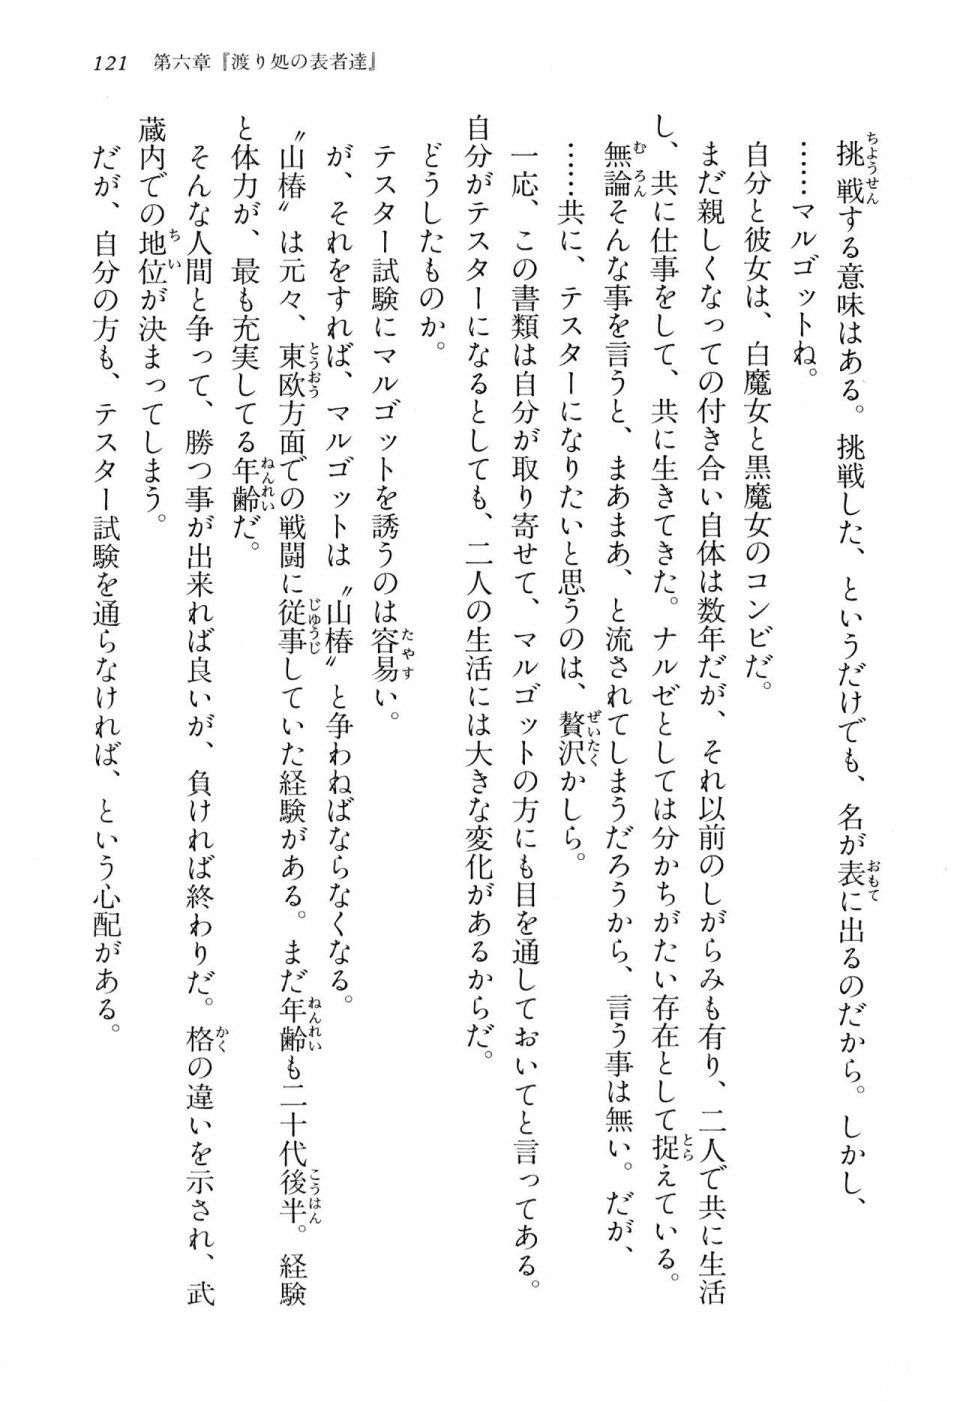 Kyoukai Senjou no Horizon BD Special Mininovel Vol 2(1B) - Photo #125